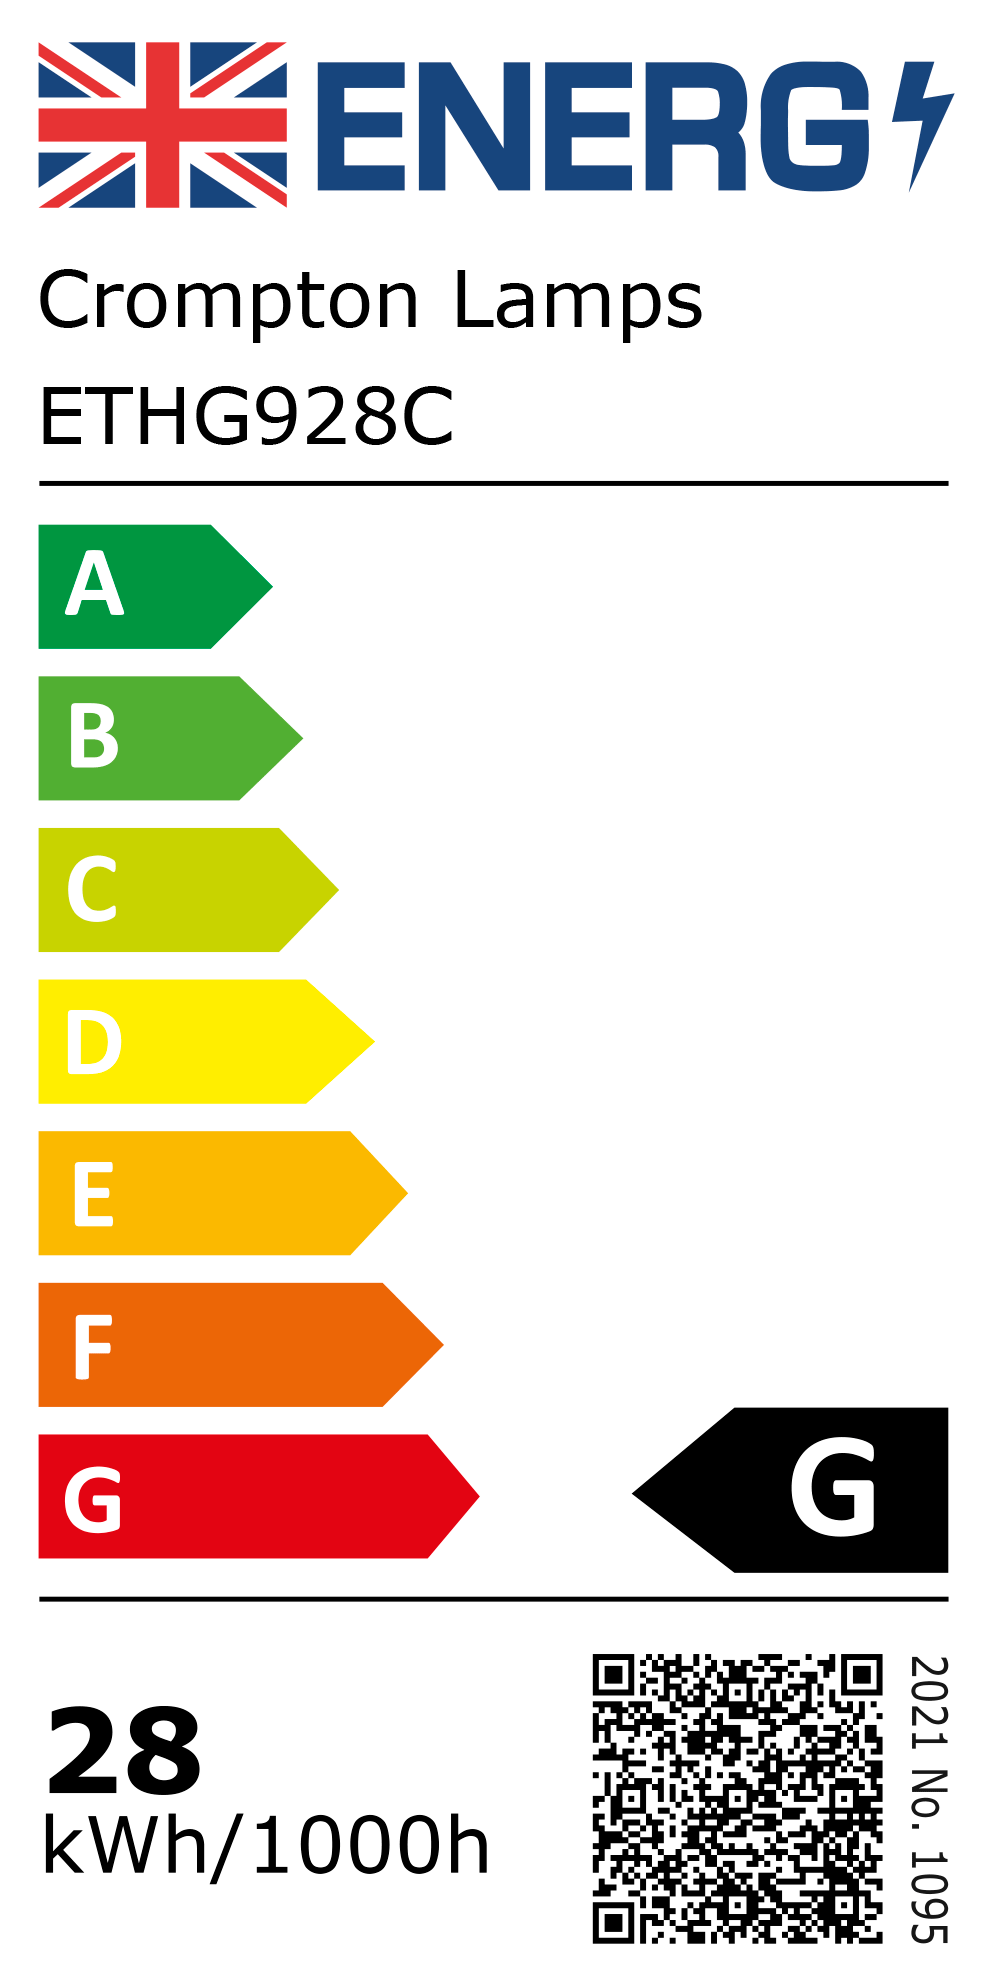 New 2021 Energy Rating Label: Stock Code ETHG928C